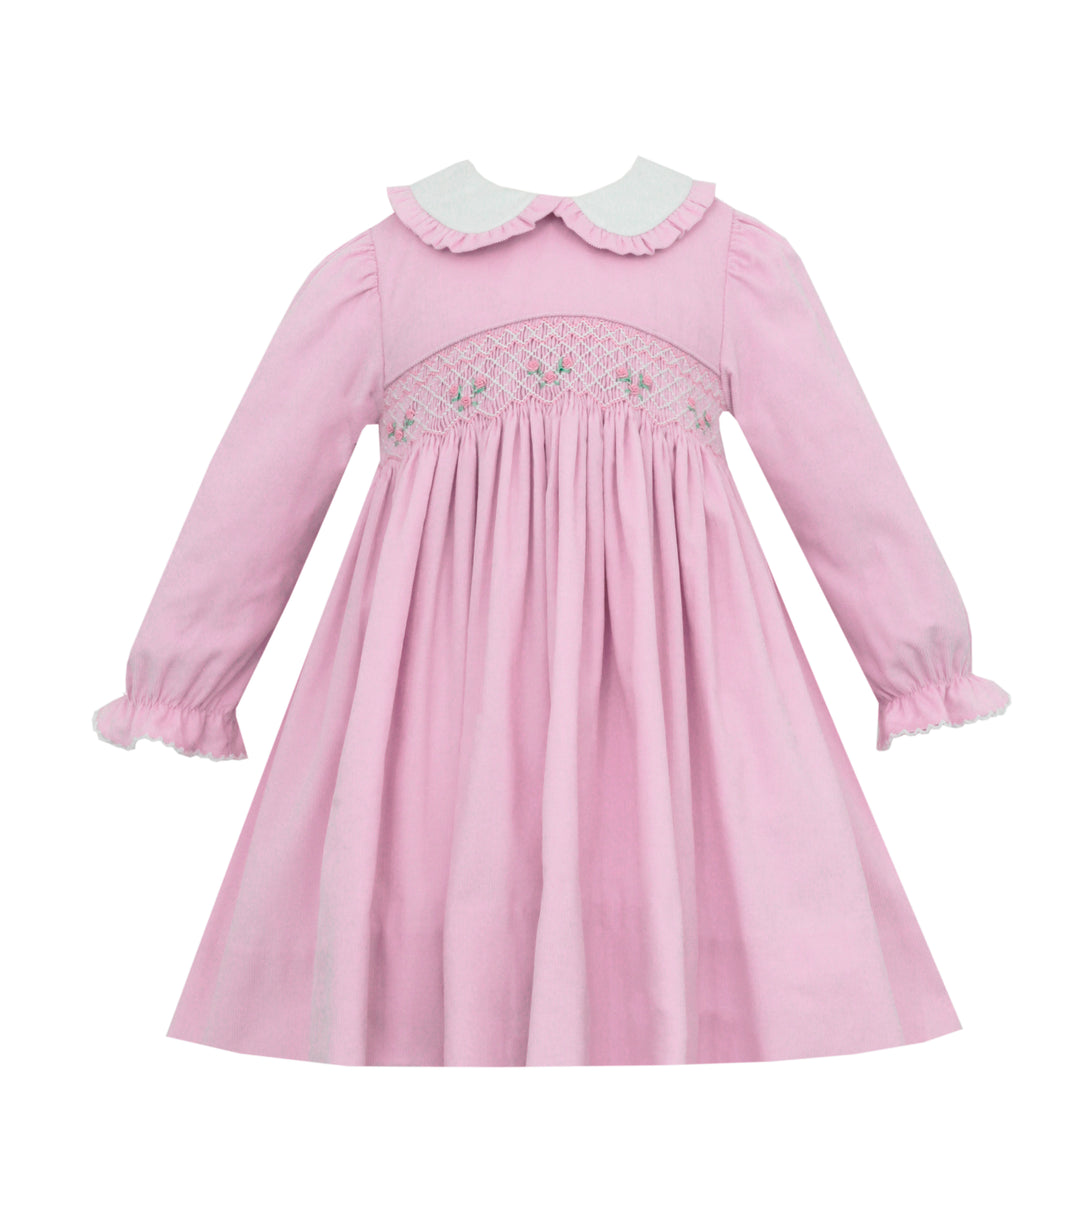 Pink corduroy dress